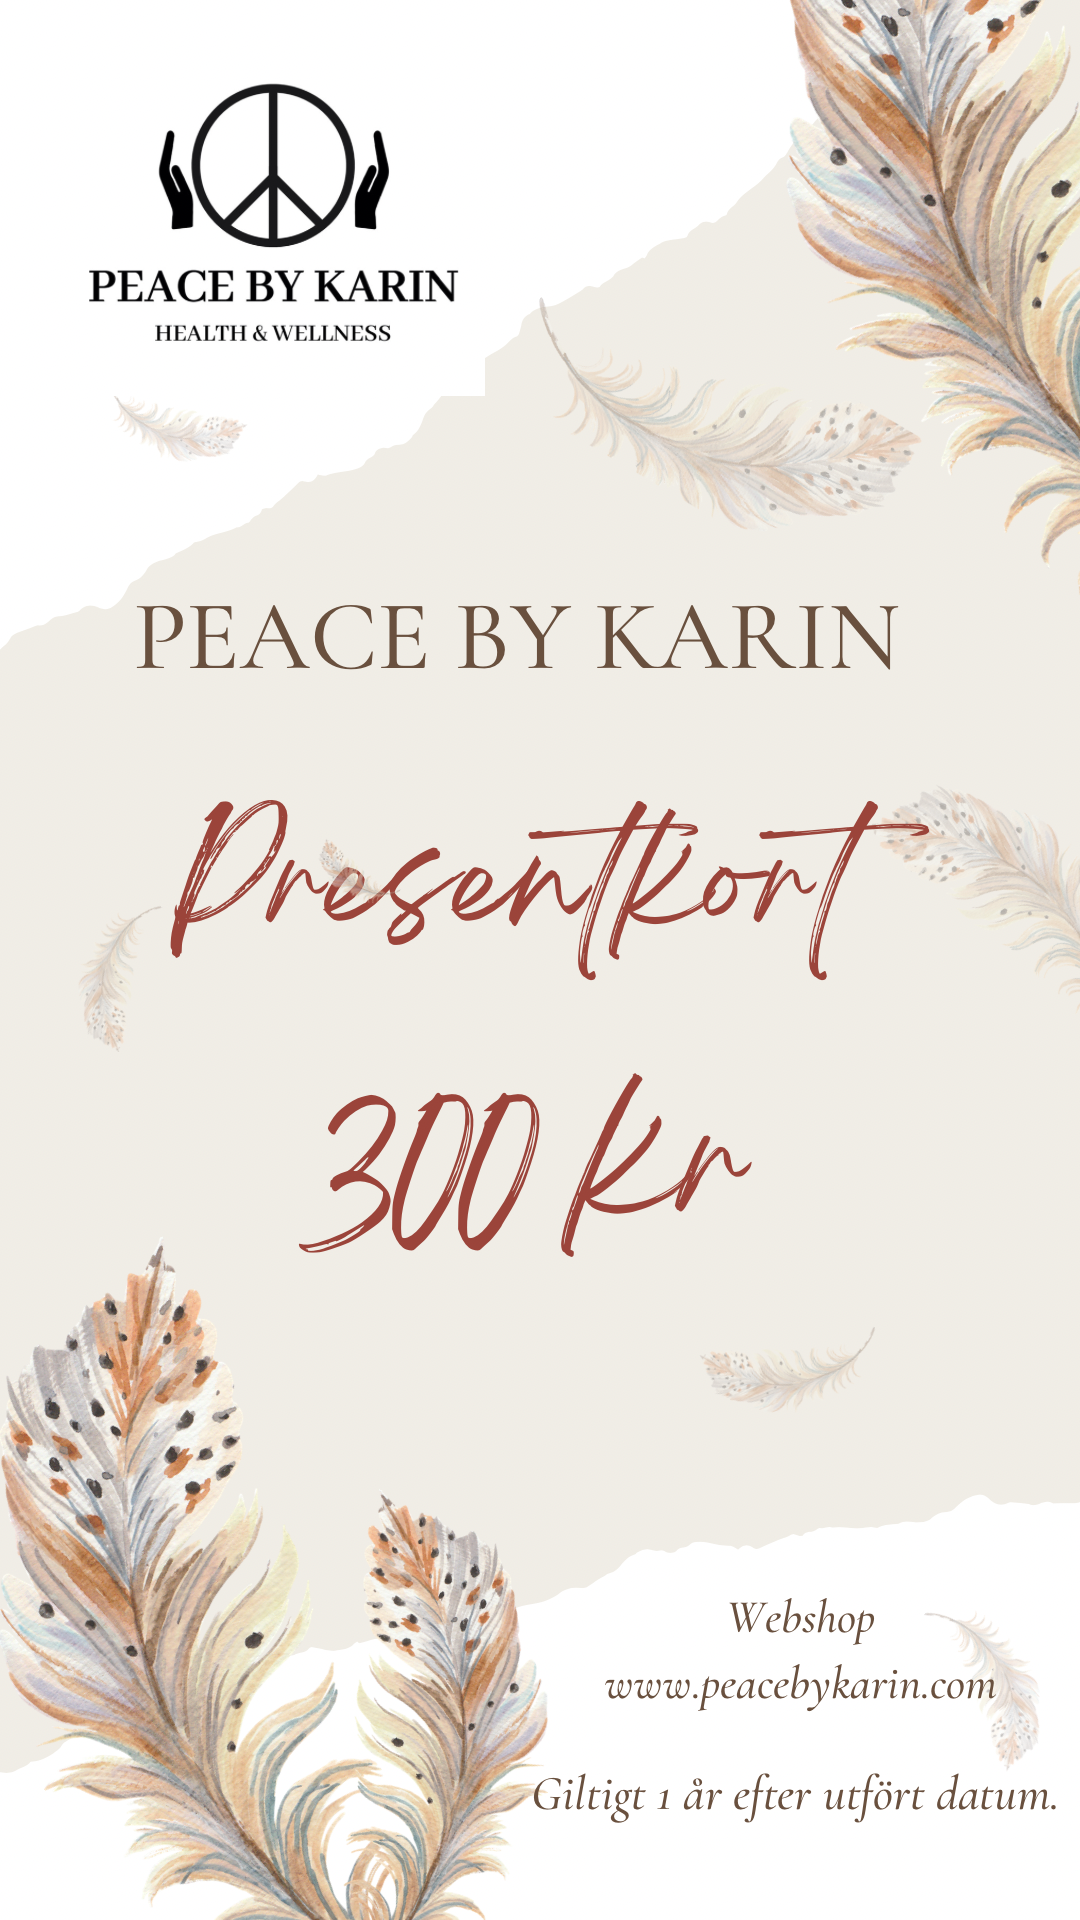 Presentkort Peace by Karin